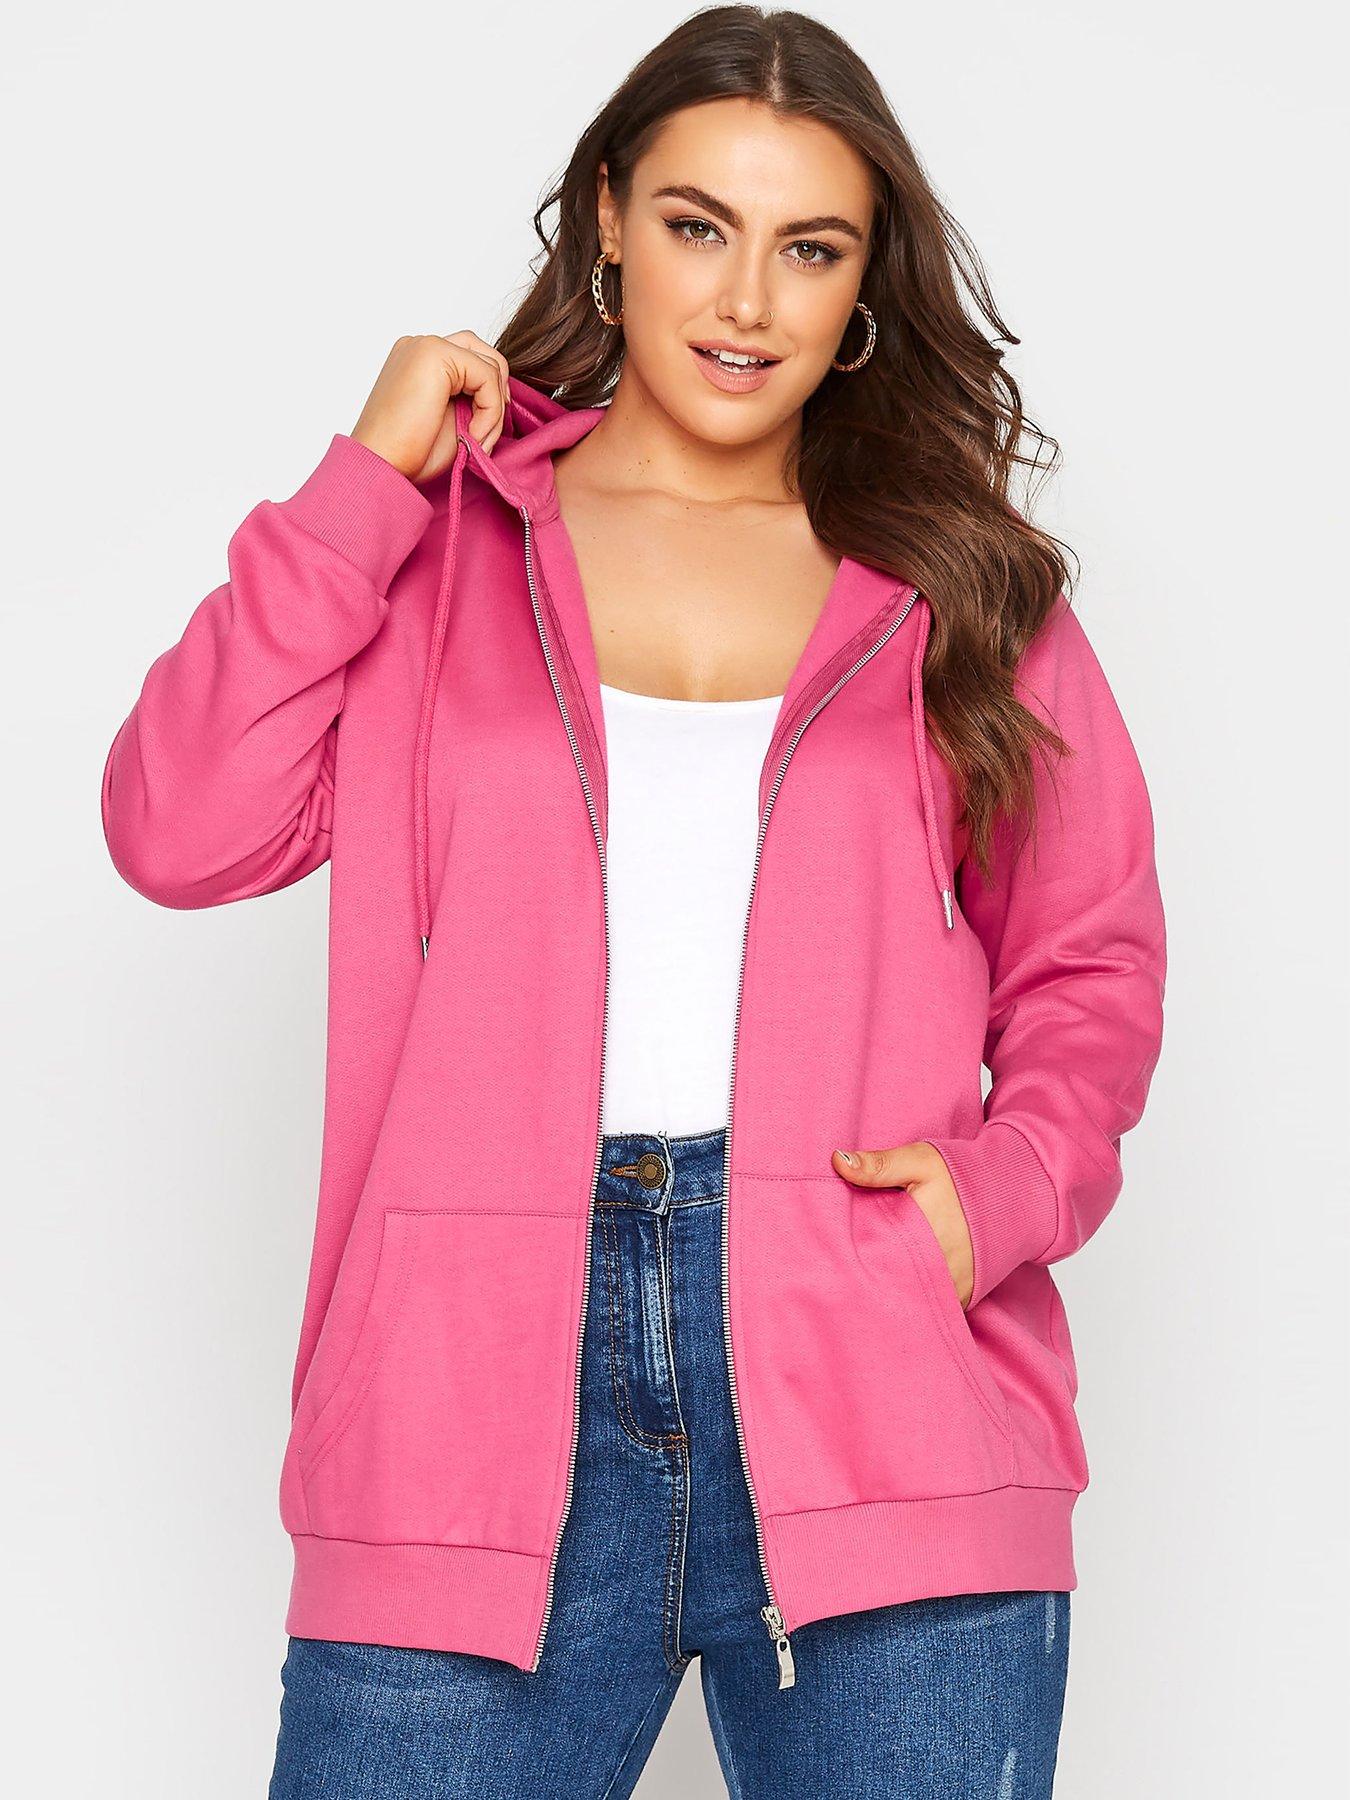 Hoodies & Sweatshirts Yours Zip Through Hoodie - Hot Pink